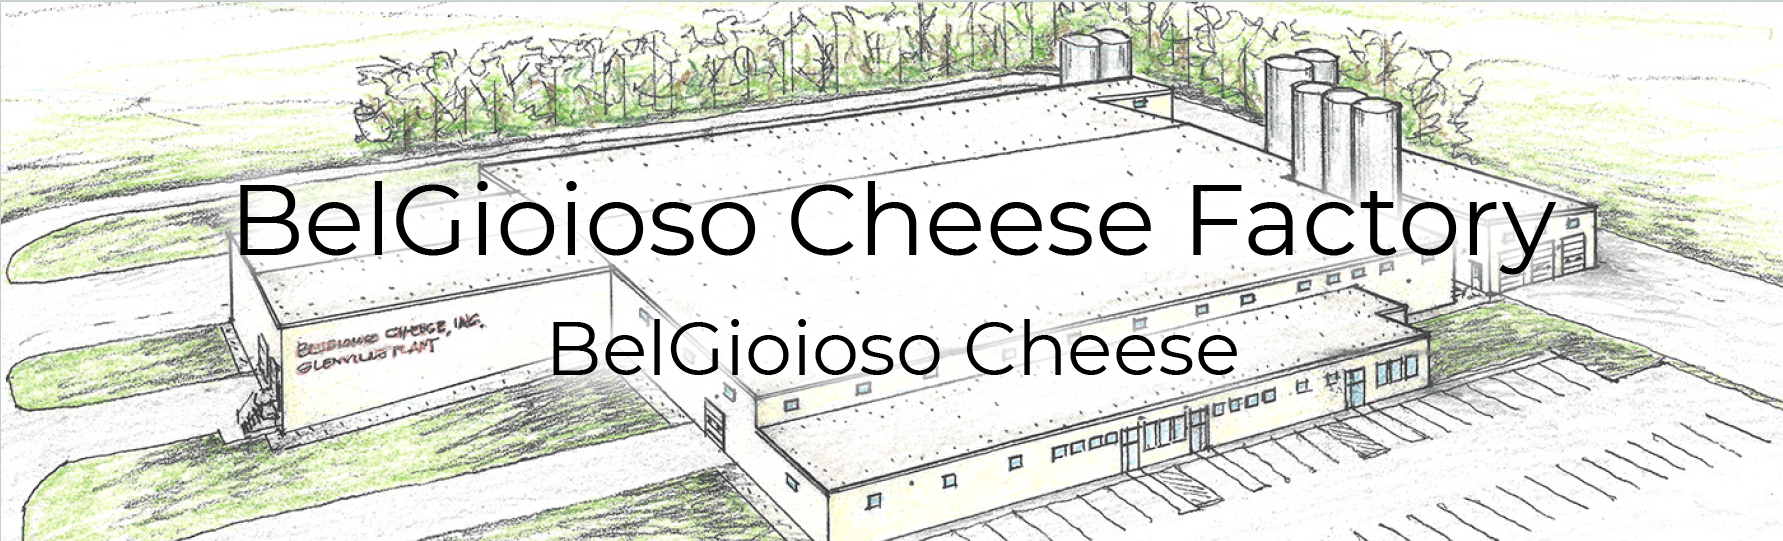 BelGioioso Cheese Factory